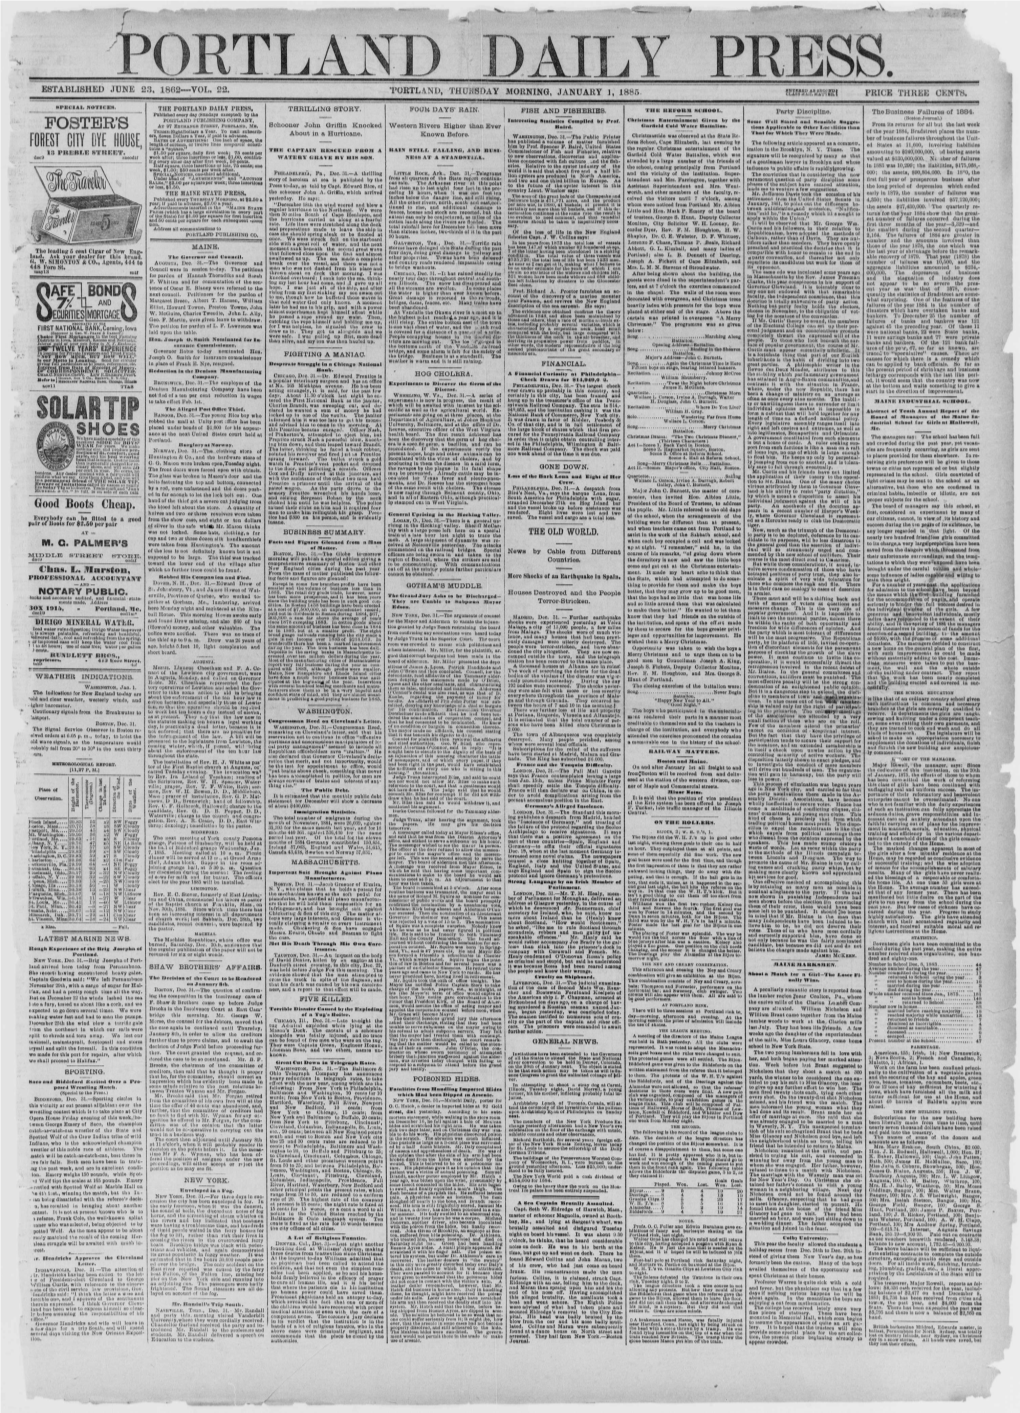 Portland Daily Press: October 23,1884